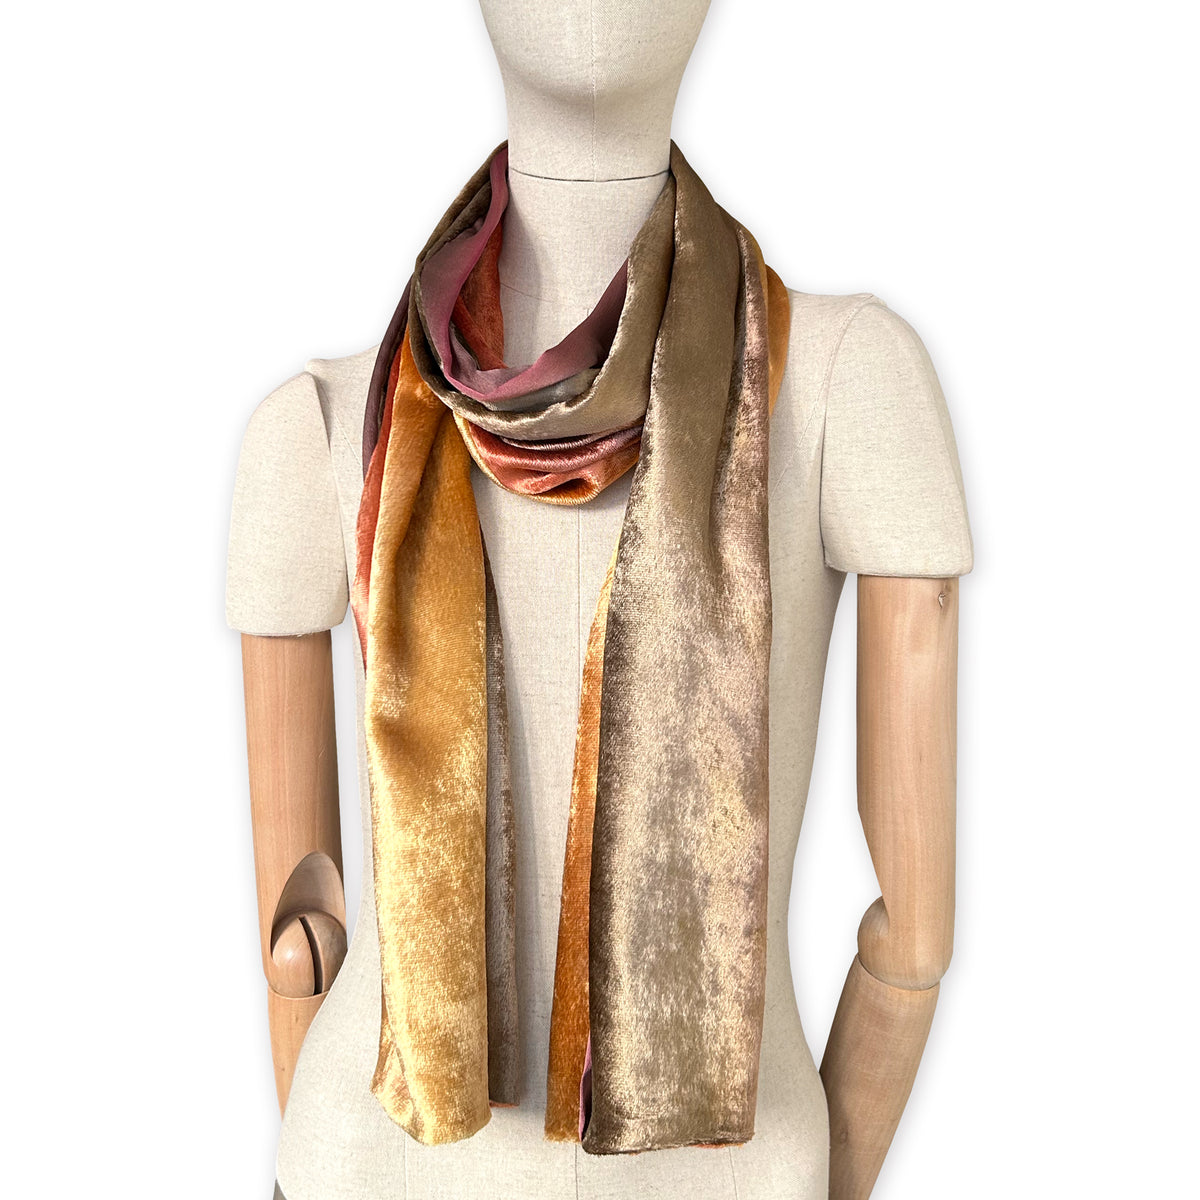 velvet-scarf-hand-painted-184x32cm-yellow-orange-red-brown-otta-italy-2345